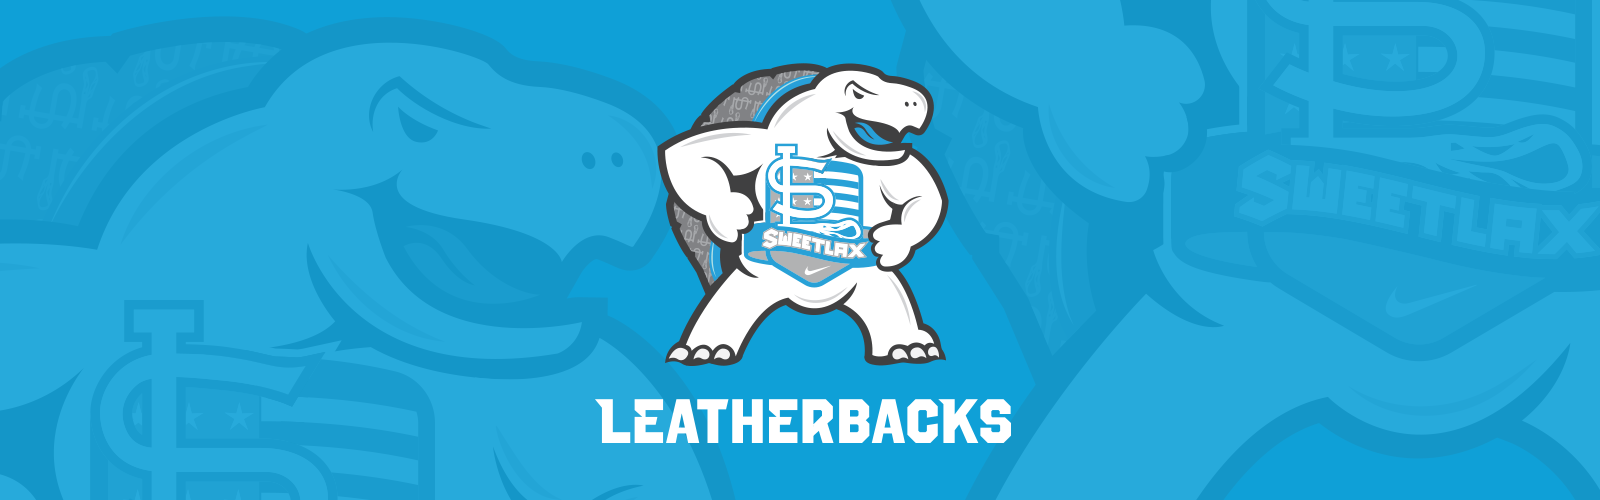 Leatherbacks - Banner V1.0 (1) (1)